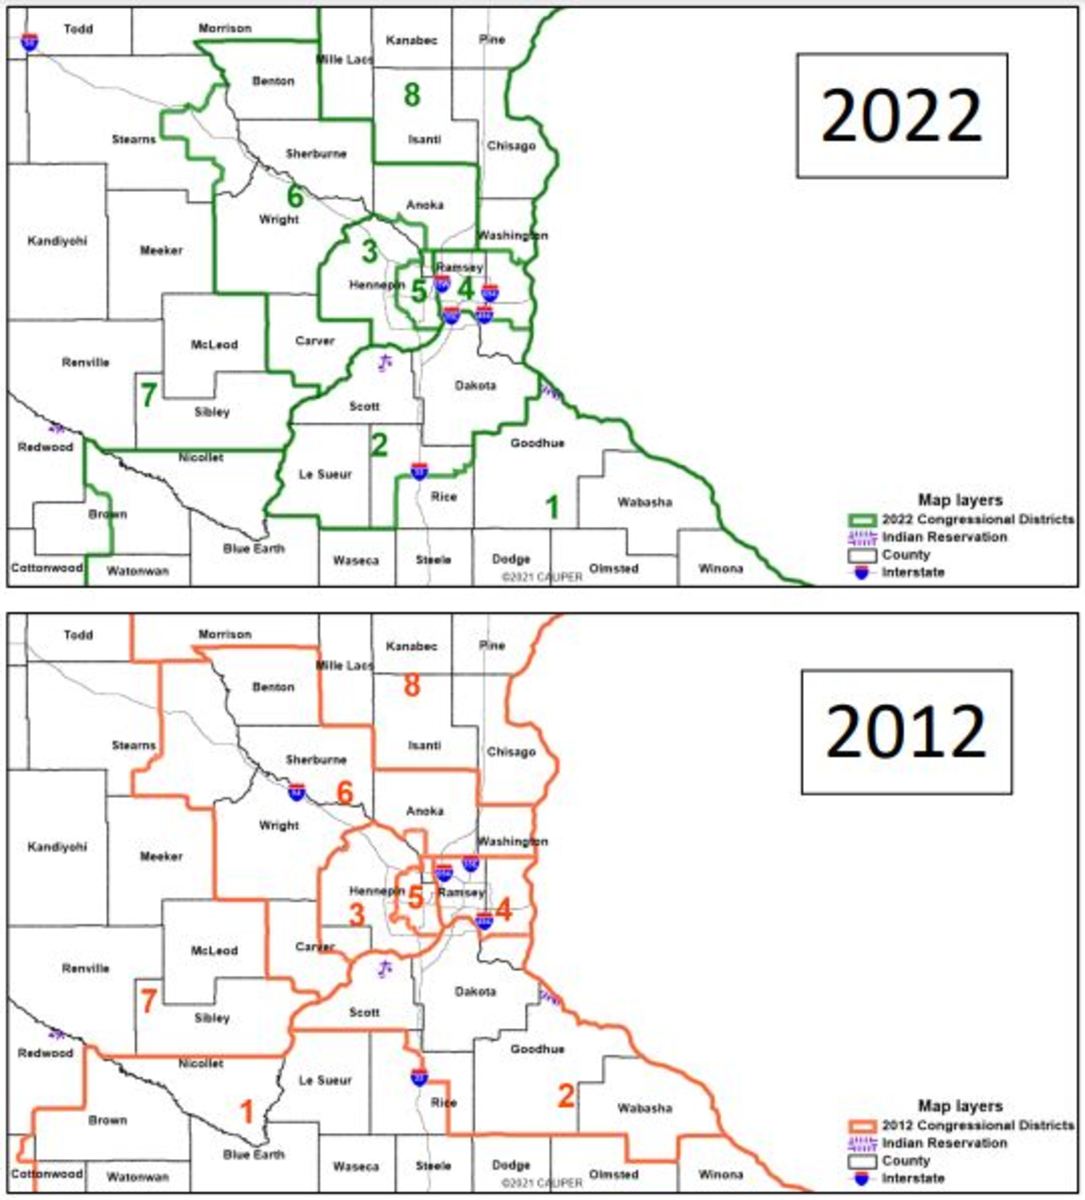 metro resdistricting comparison 2022-2012